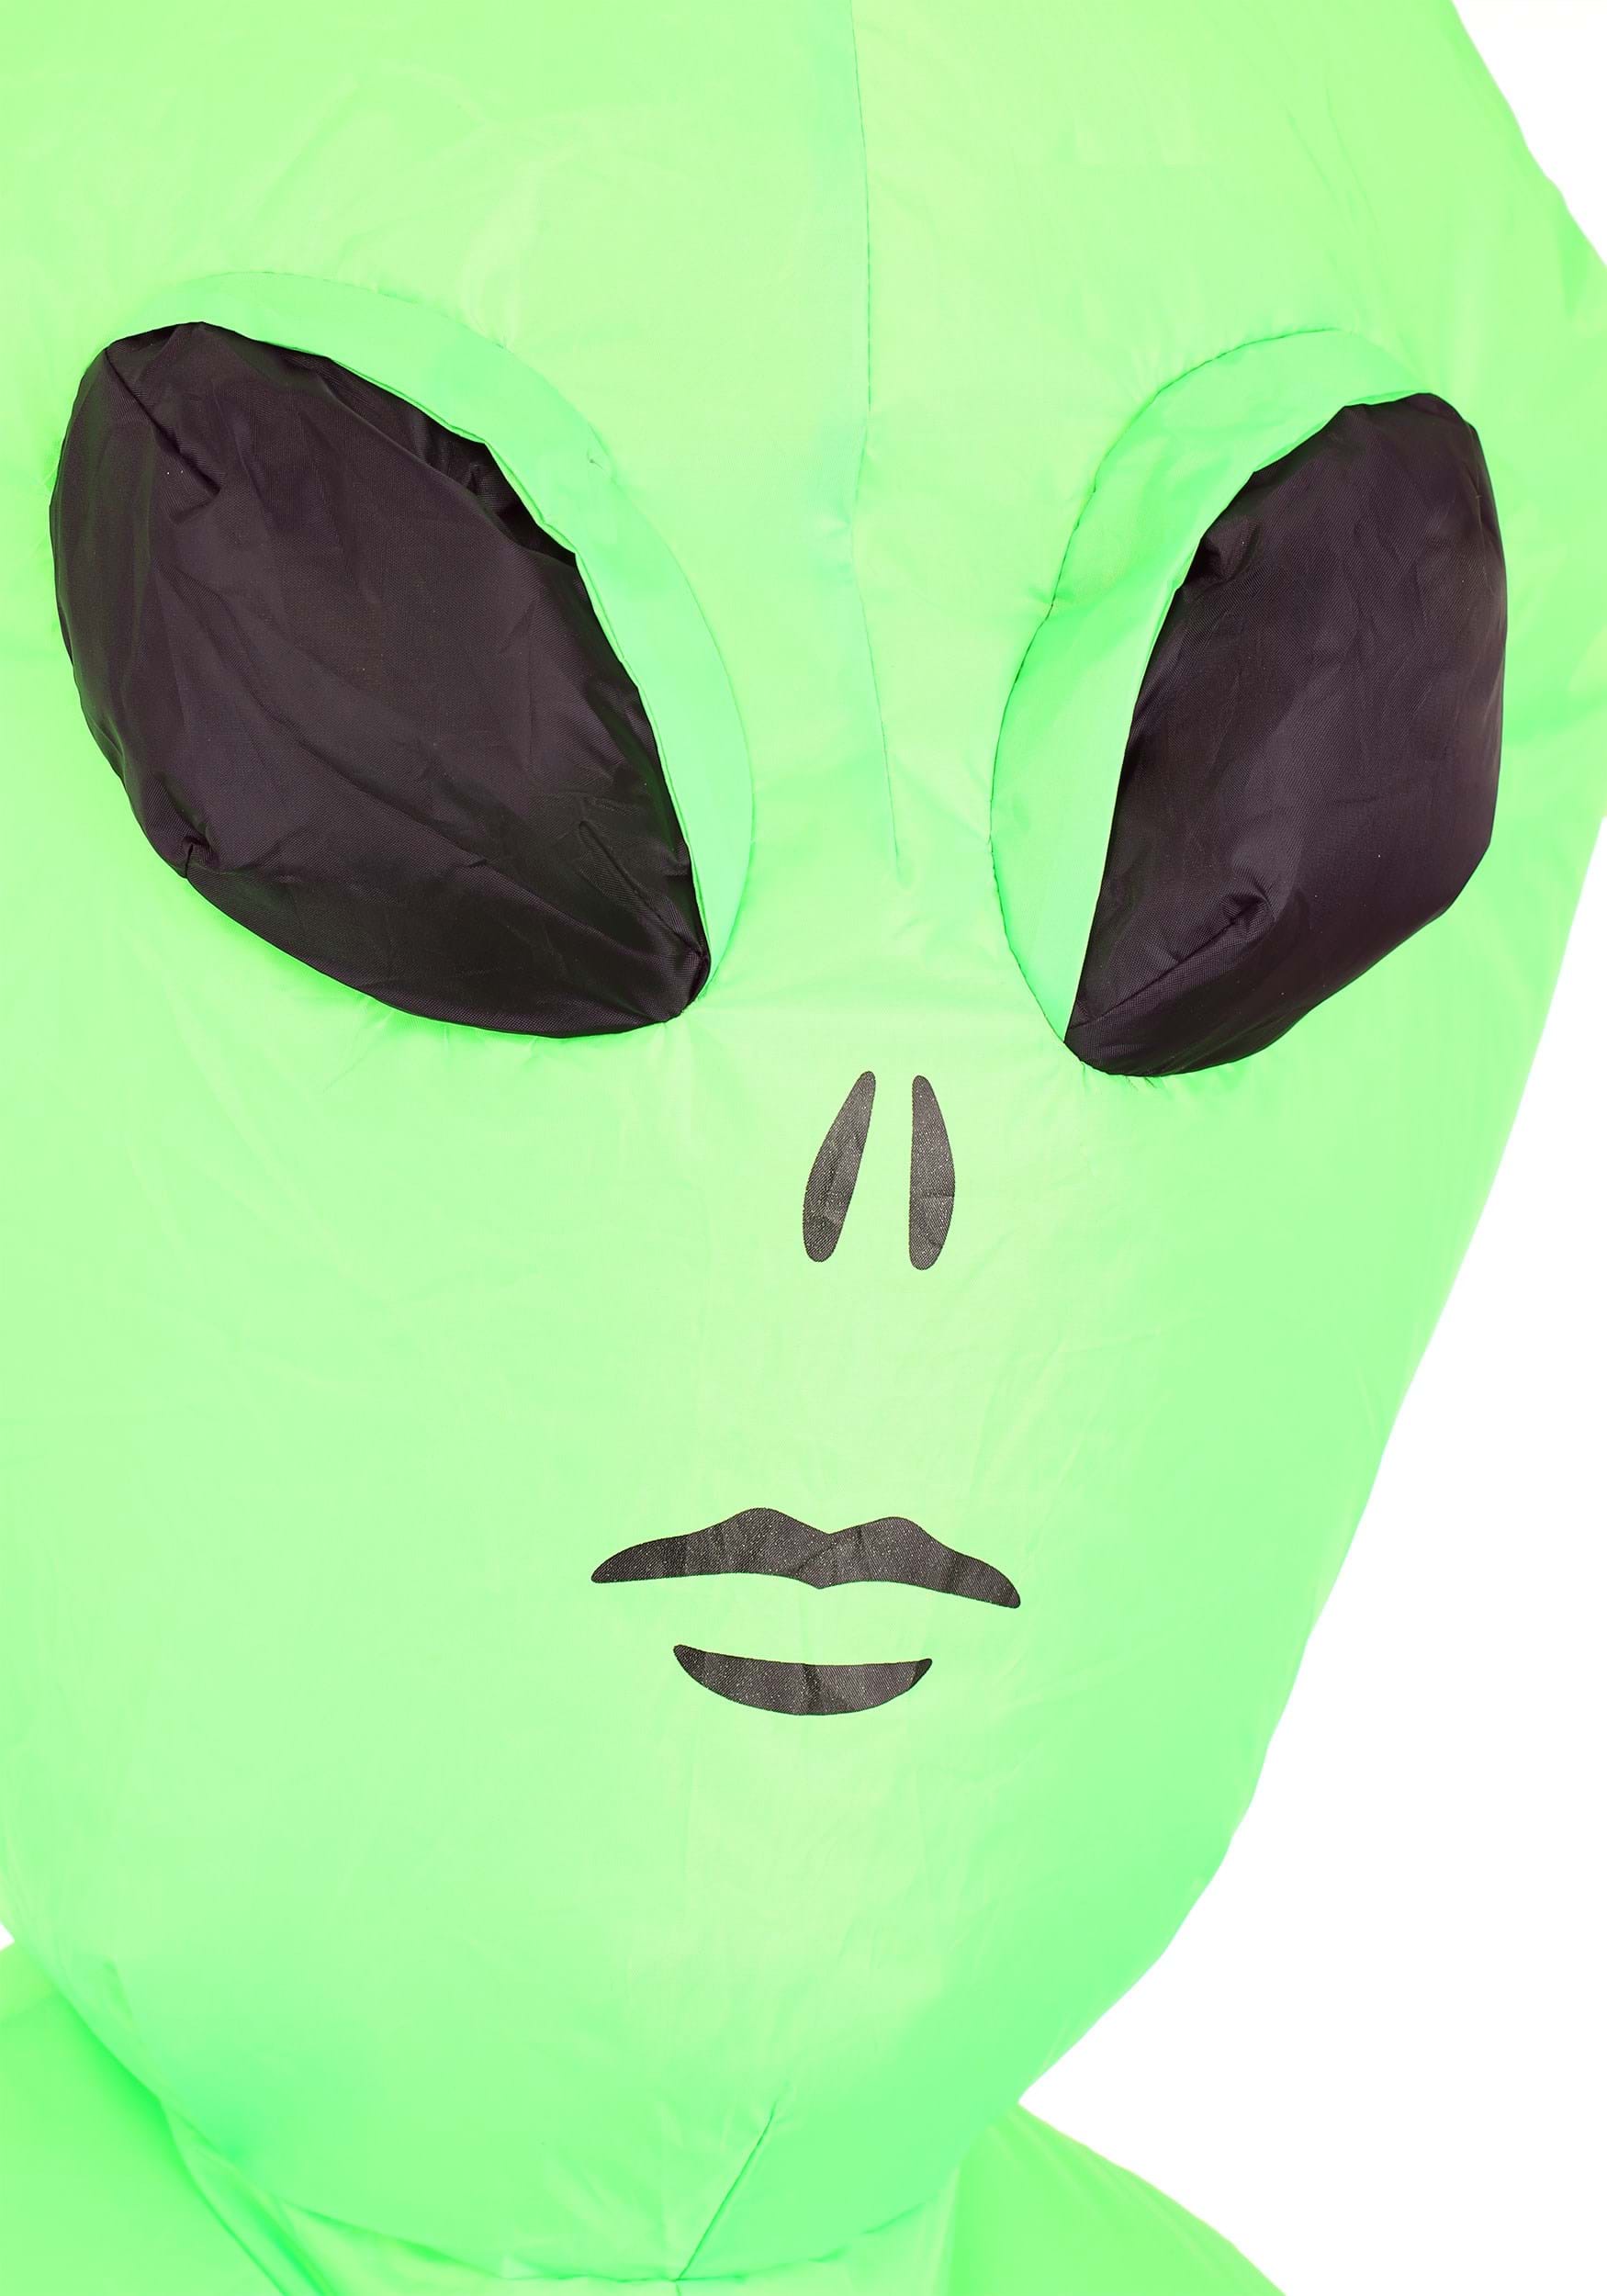 Rev Disfraz Inflable de Alien Costume